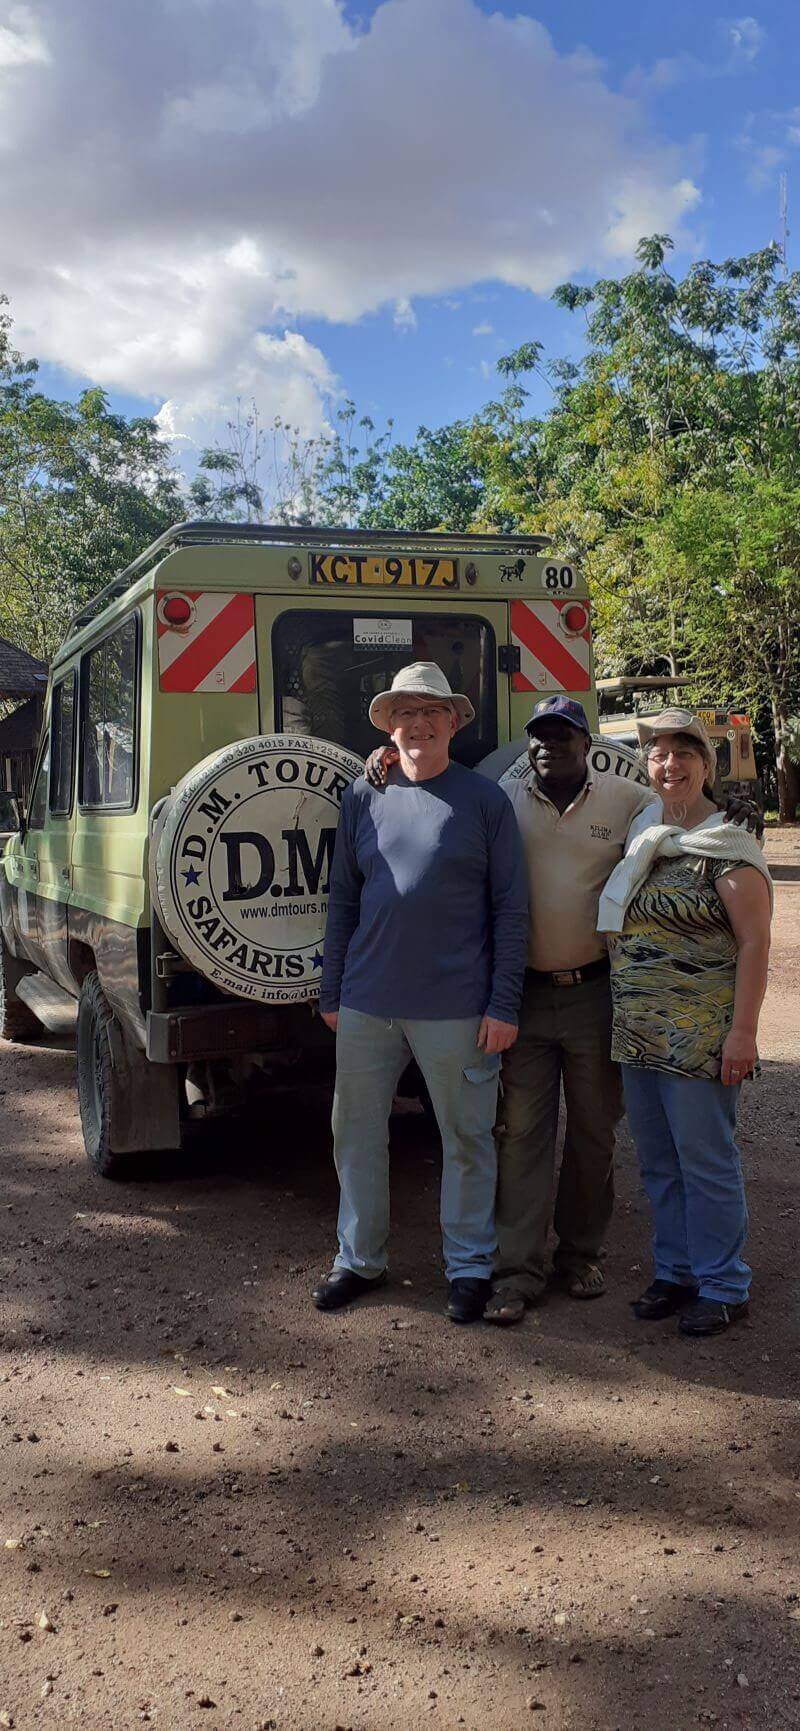 Gäste des KeniaSpezialist Reisekontor Schmidt Keniaurlaub.de während einer Kenia Safari im Kenia Urlaub - Kenia Reise